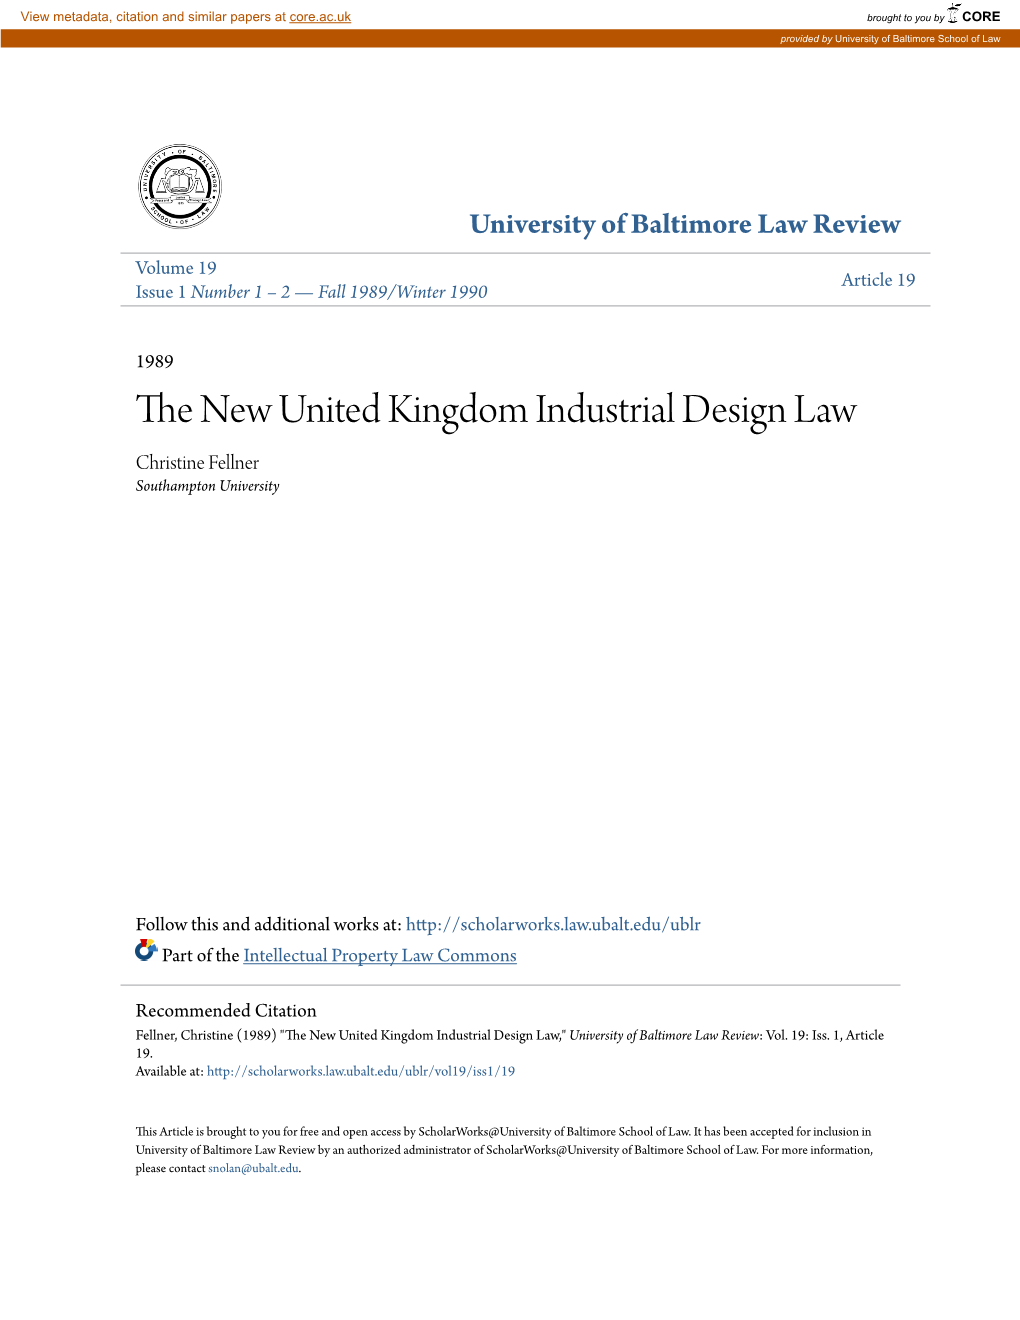 The New United Kingdom Industrial Design Law